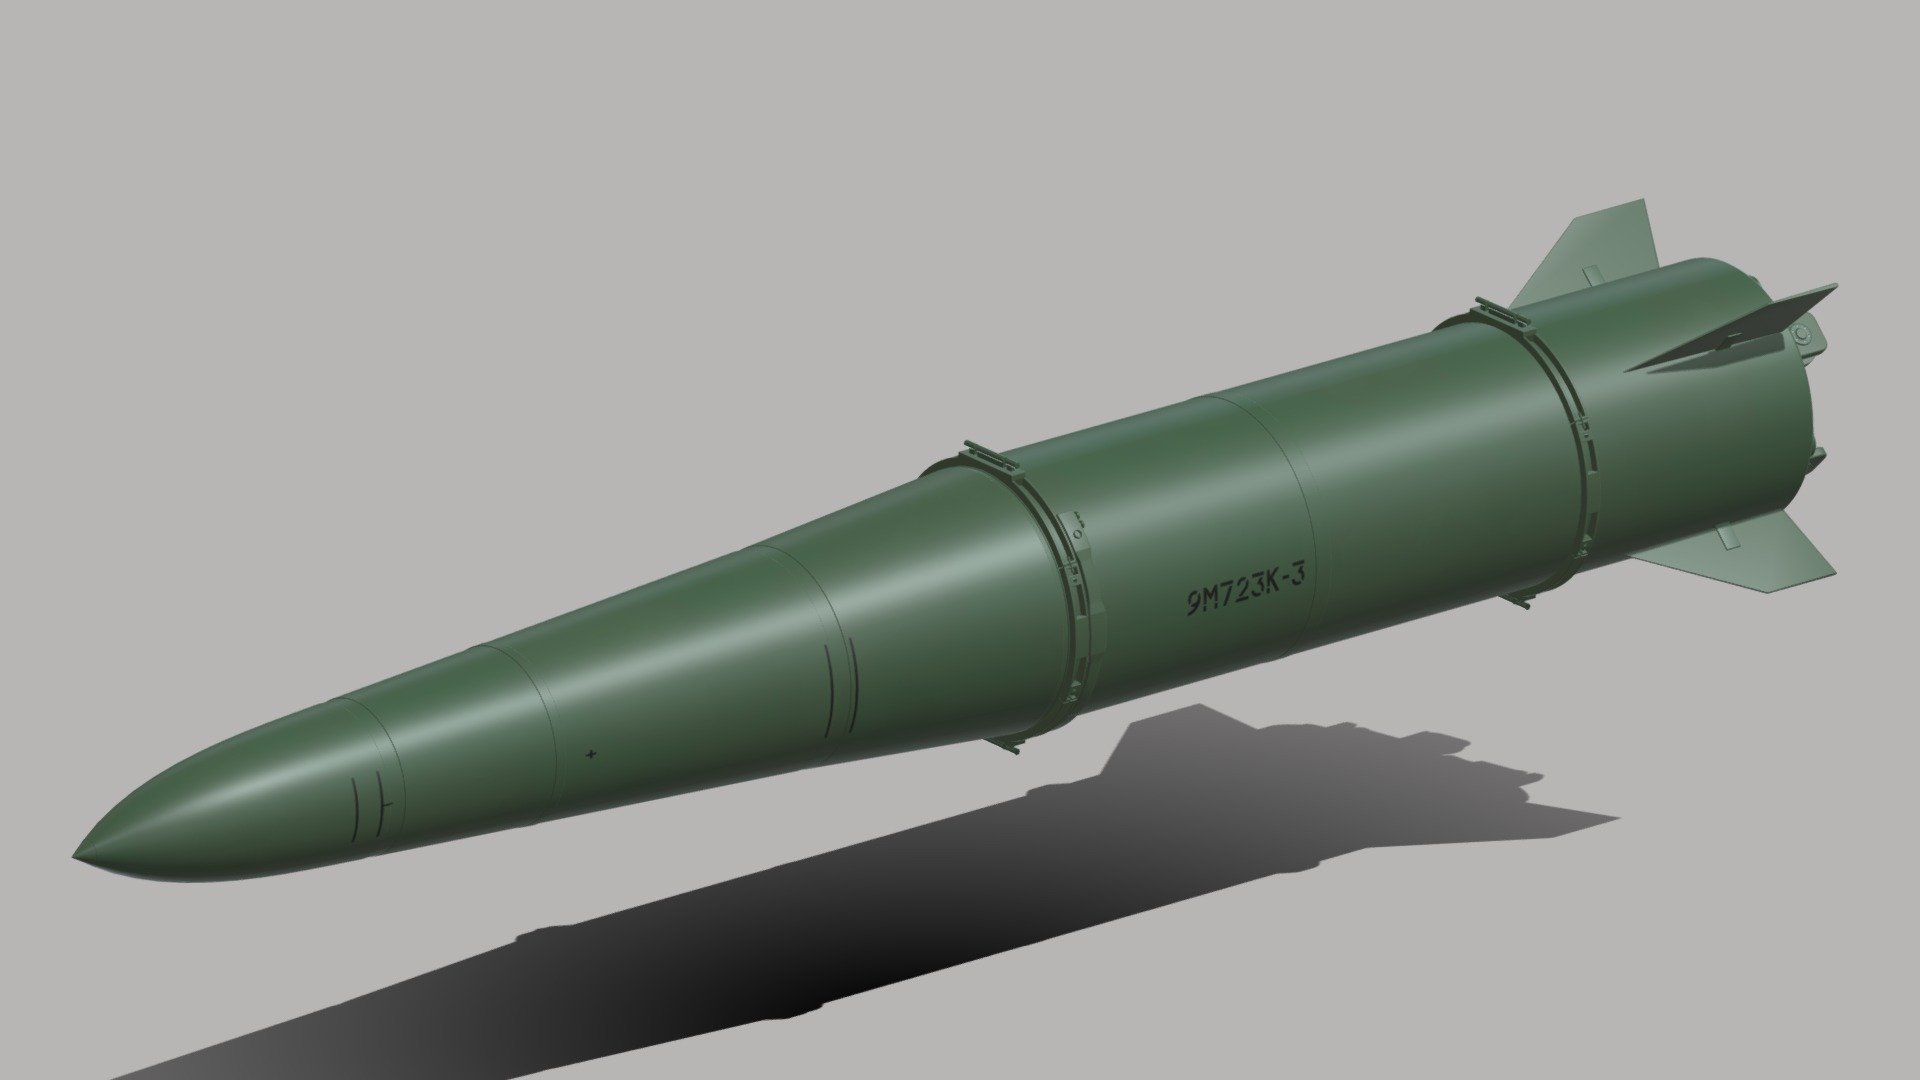 The upgraded missile designated 9M723K for the Iskander-M missile system. Modelled by Selena3D 3d model